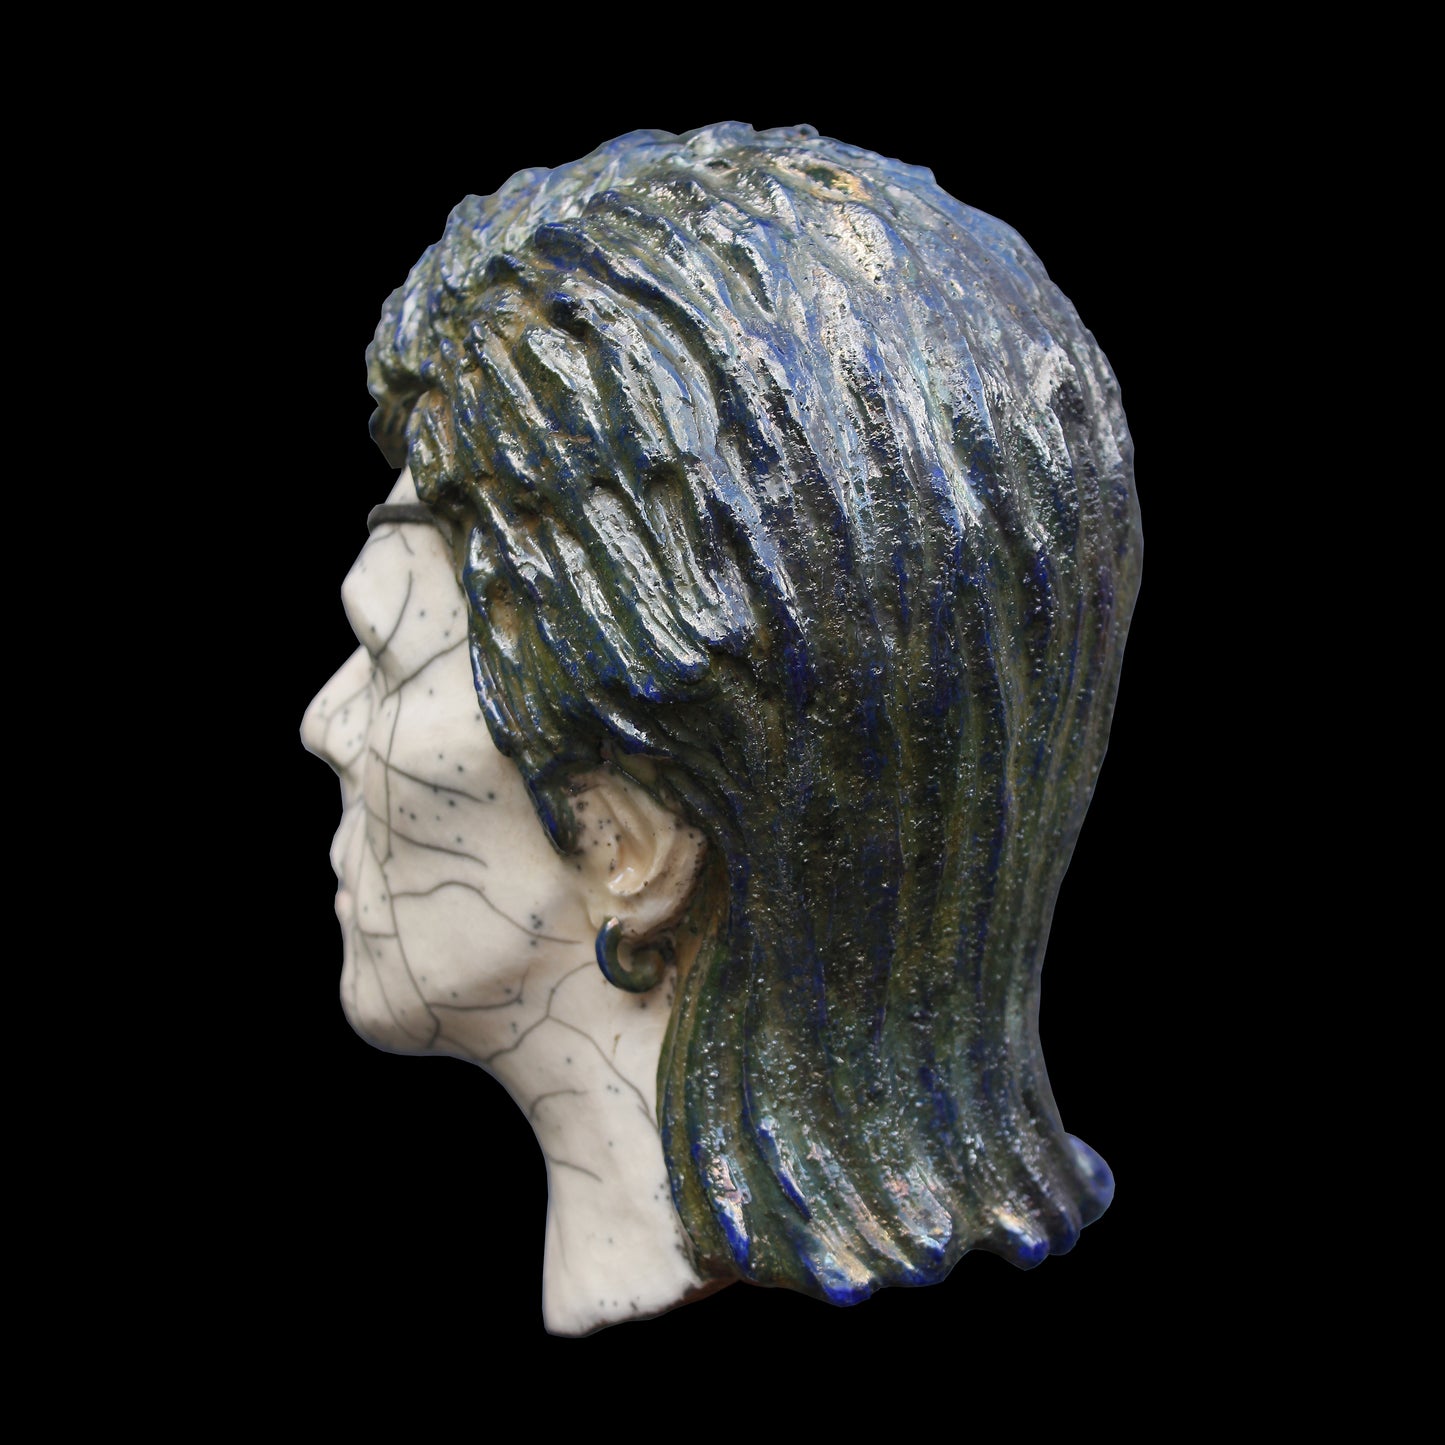 SALE - David Bowie - Halloween Jack Raku Ceramic Full Head Sculpture